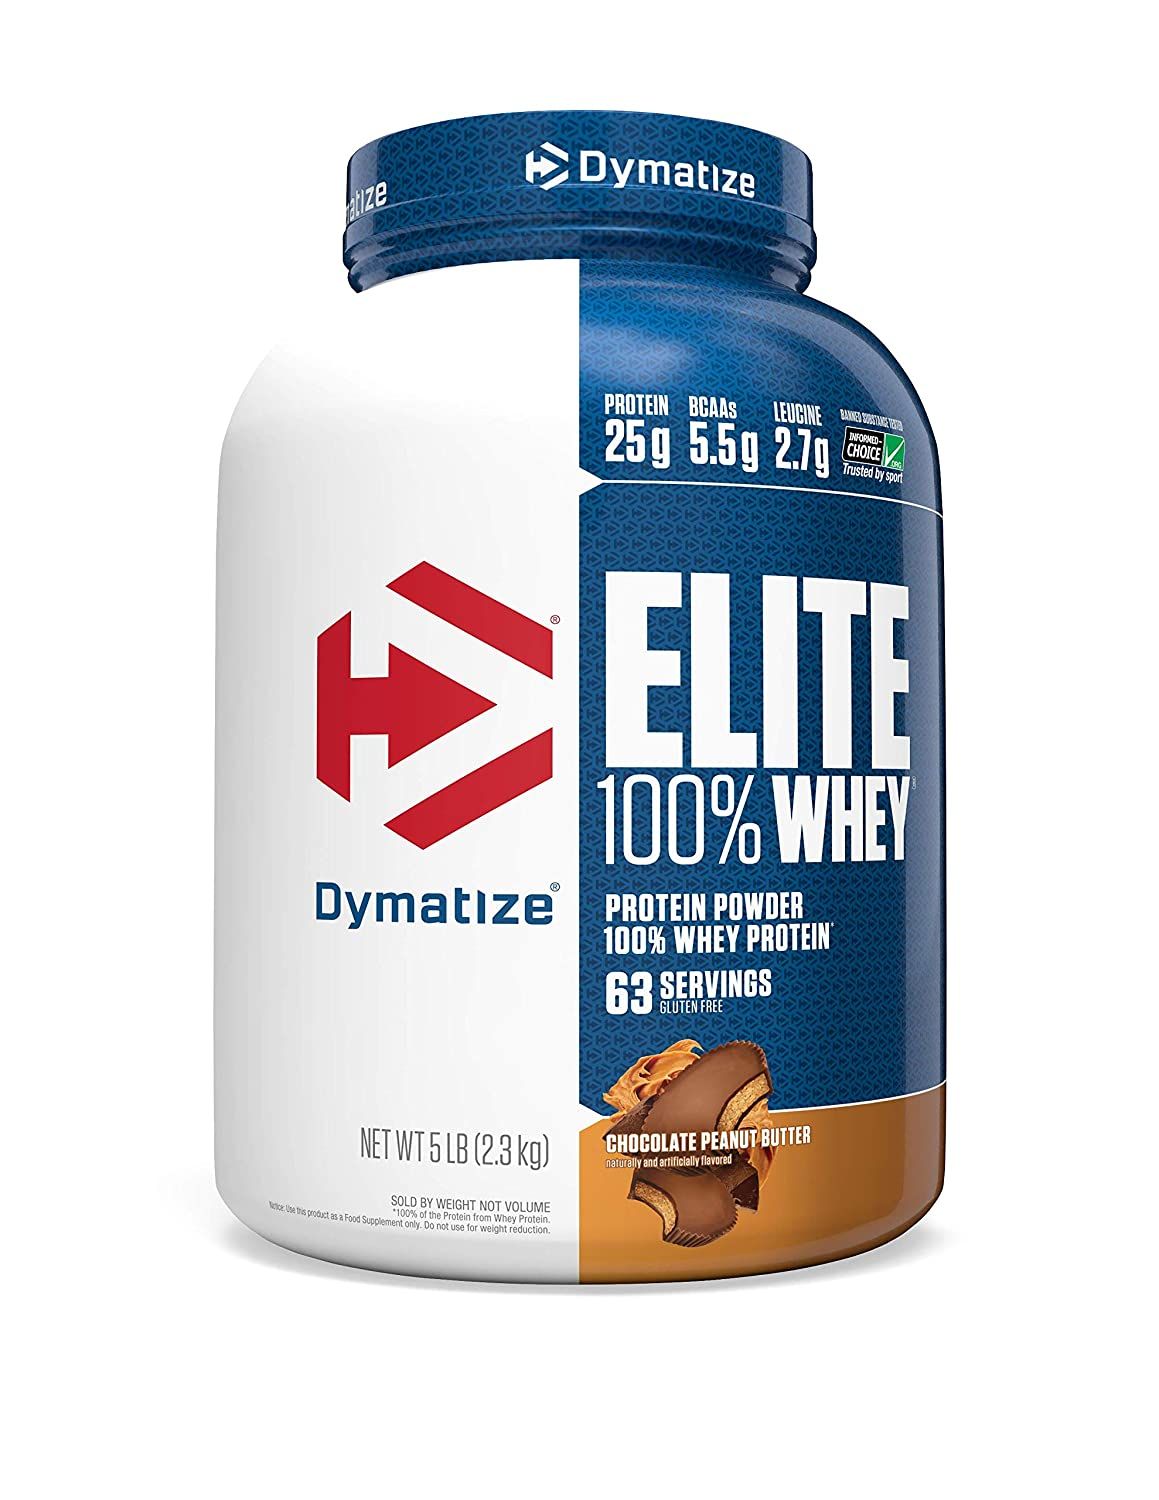 Dymatize Nutrition Dymatize Elite Whey Protein Supplement Powder Chocolate Peanut Butter Image